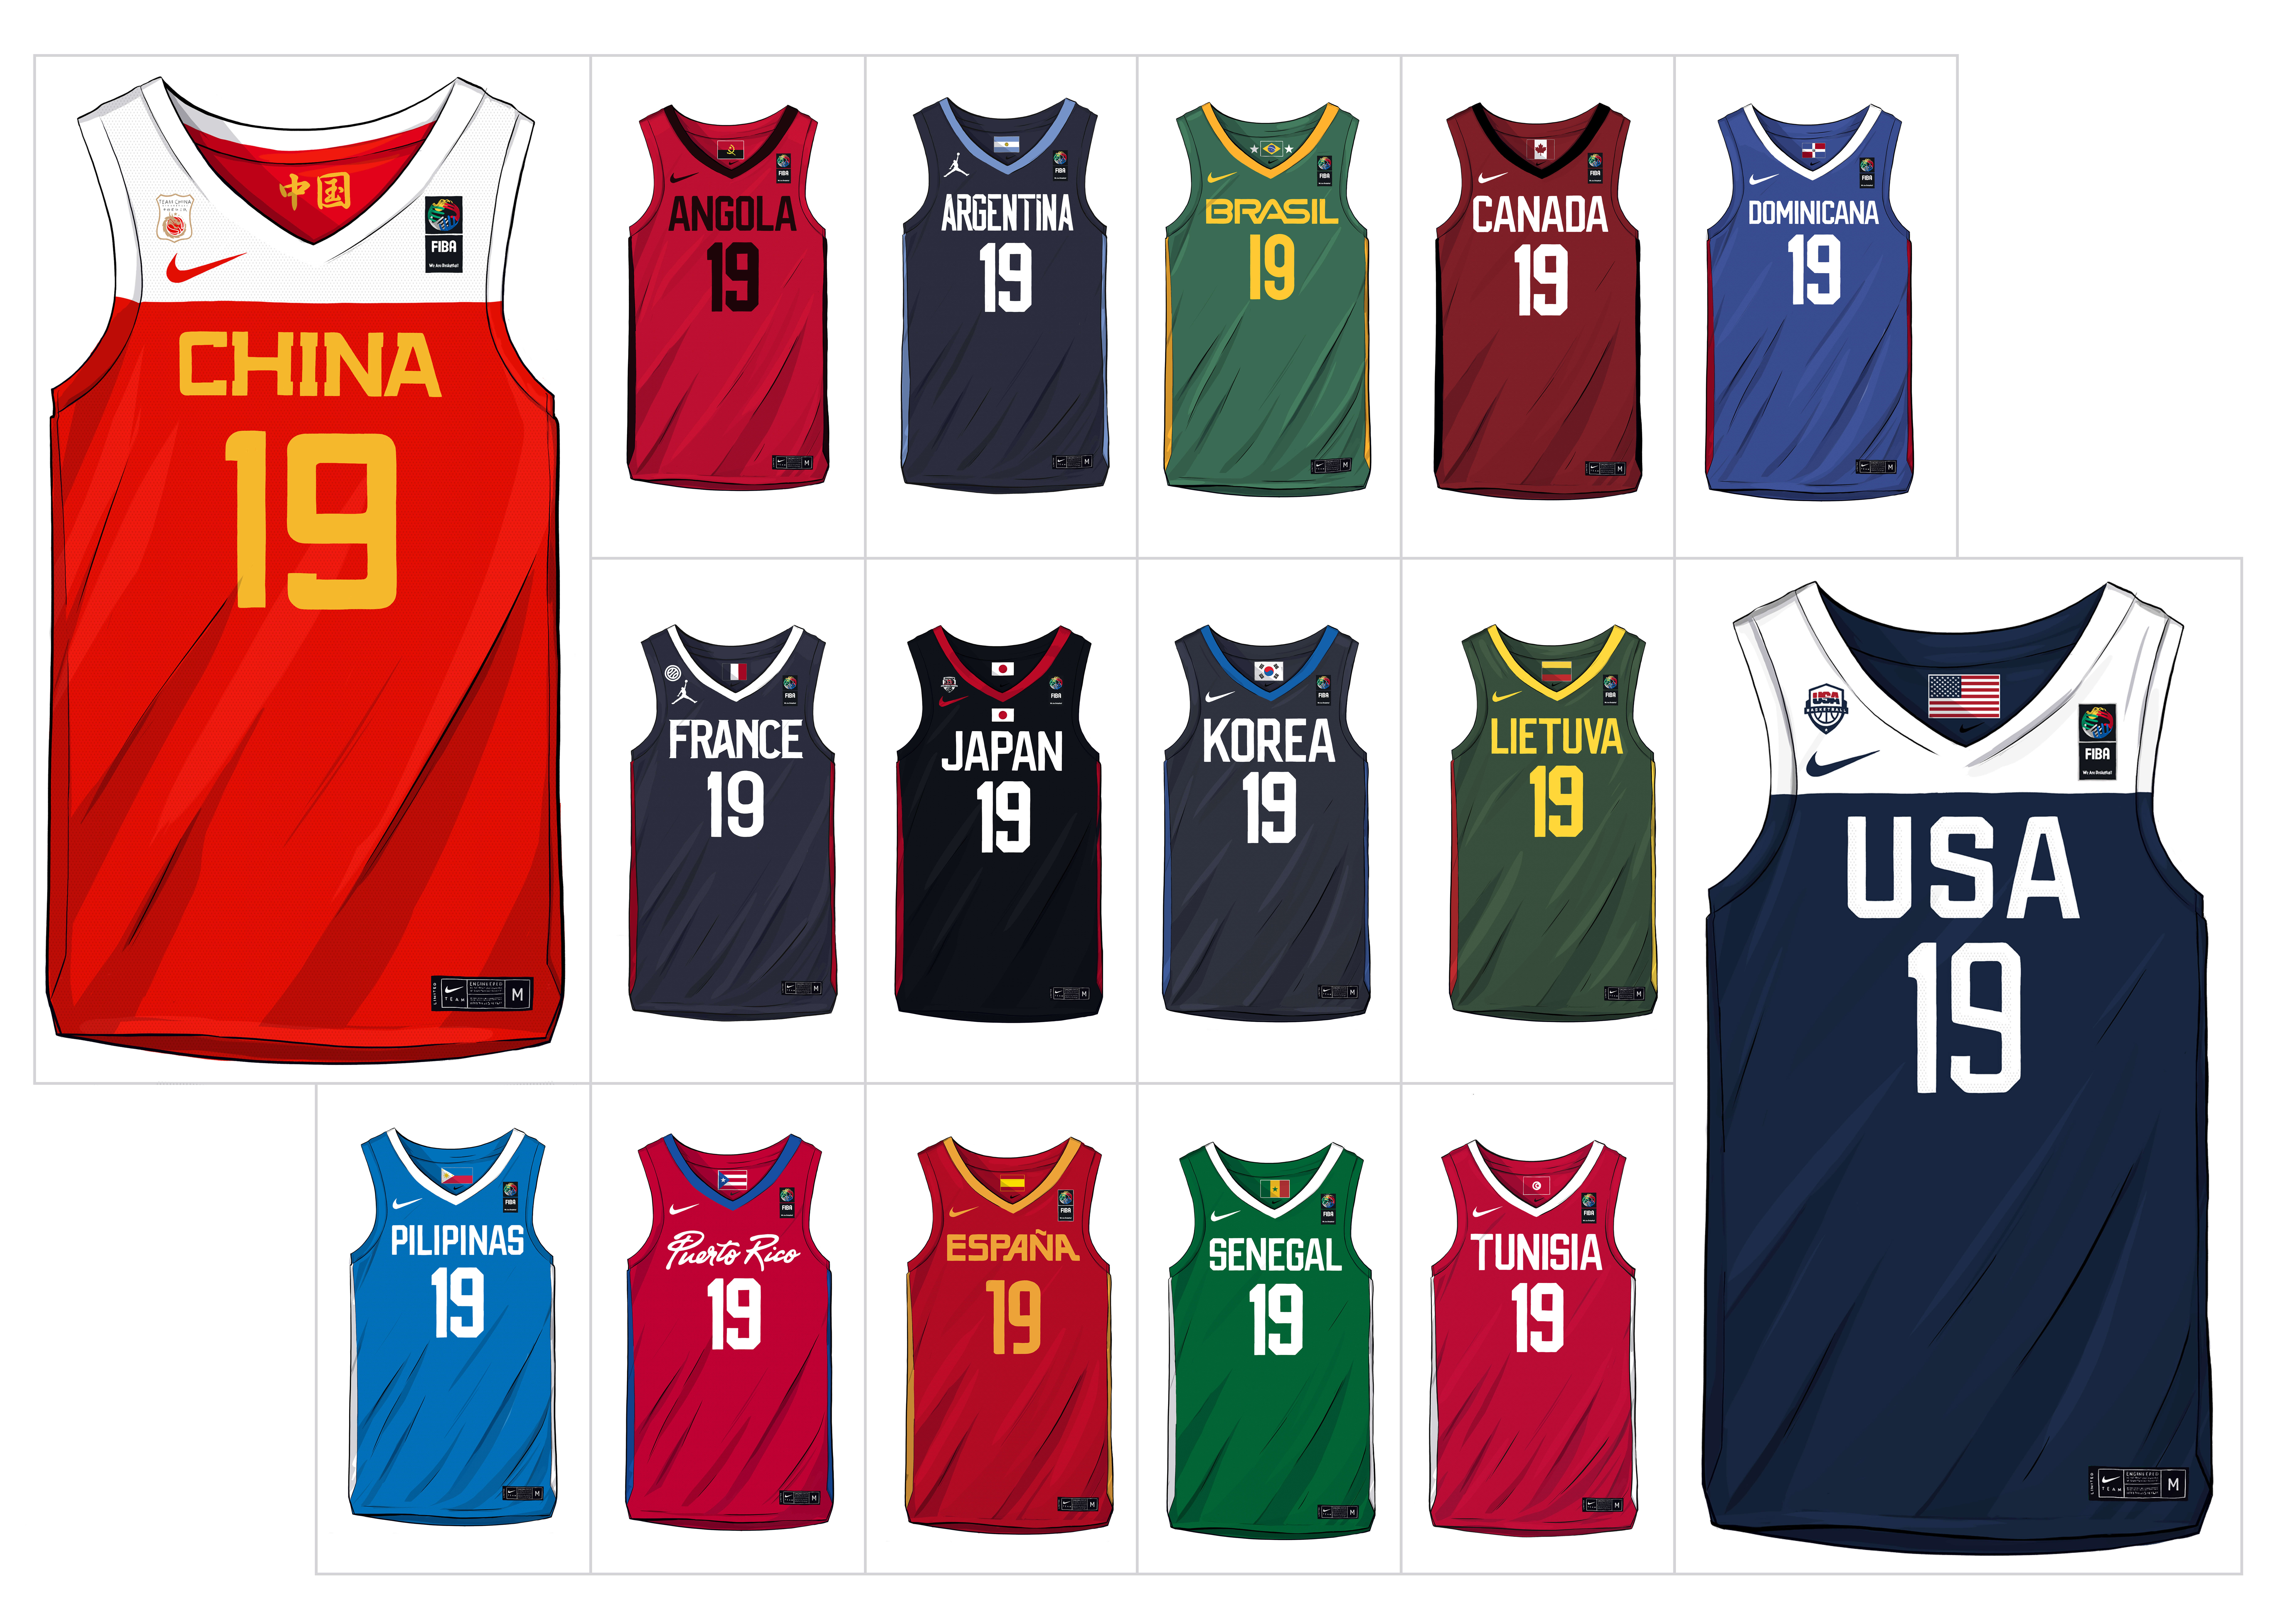 Nike and Jordan Brand FIBA Jerseys